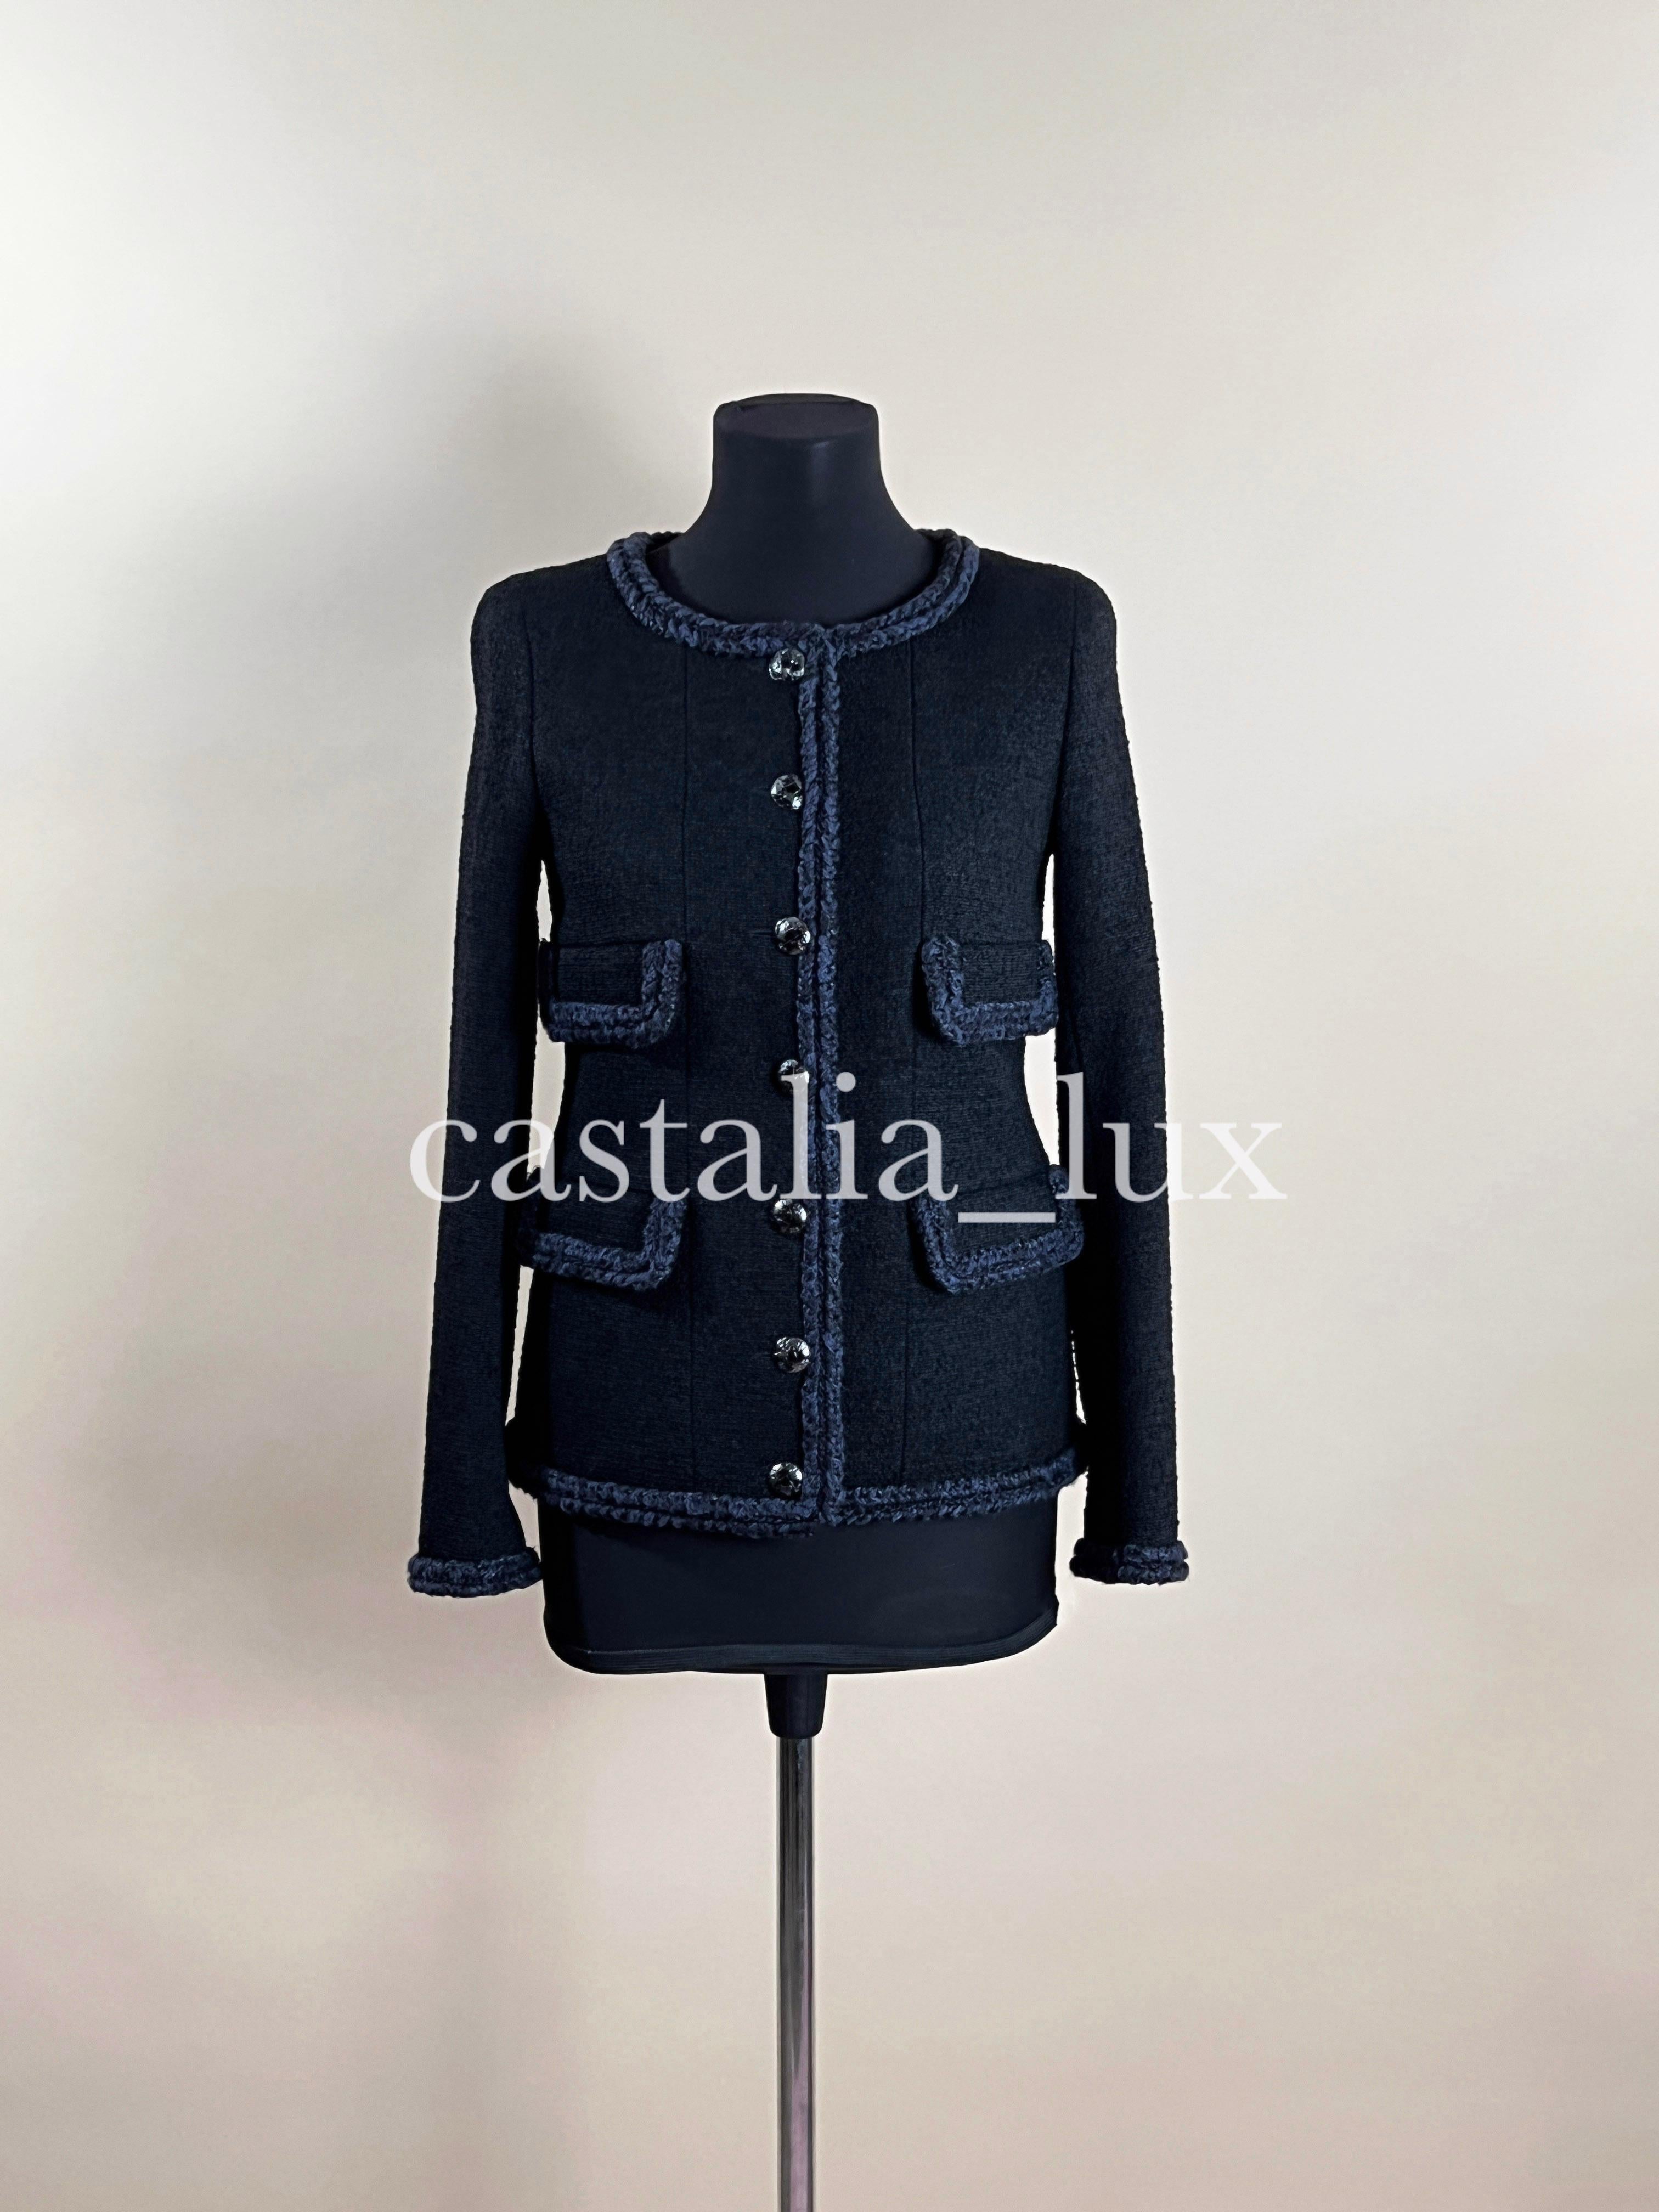 Chanel Iconic Keira Knightley Style Black Tweed Jacket 5